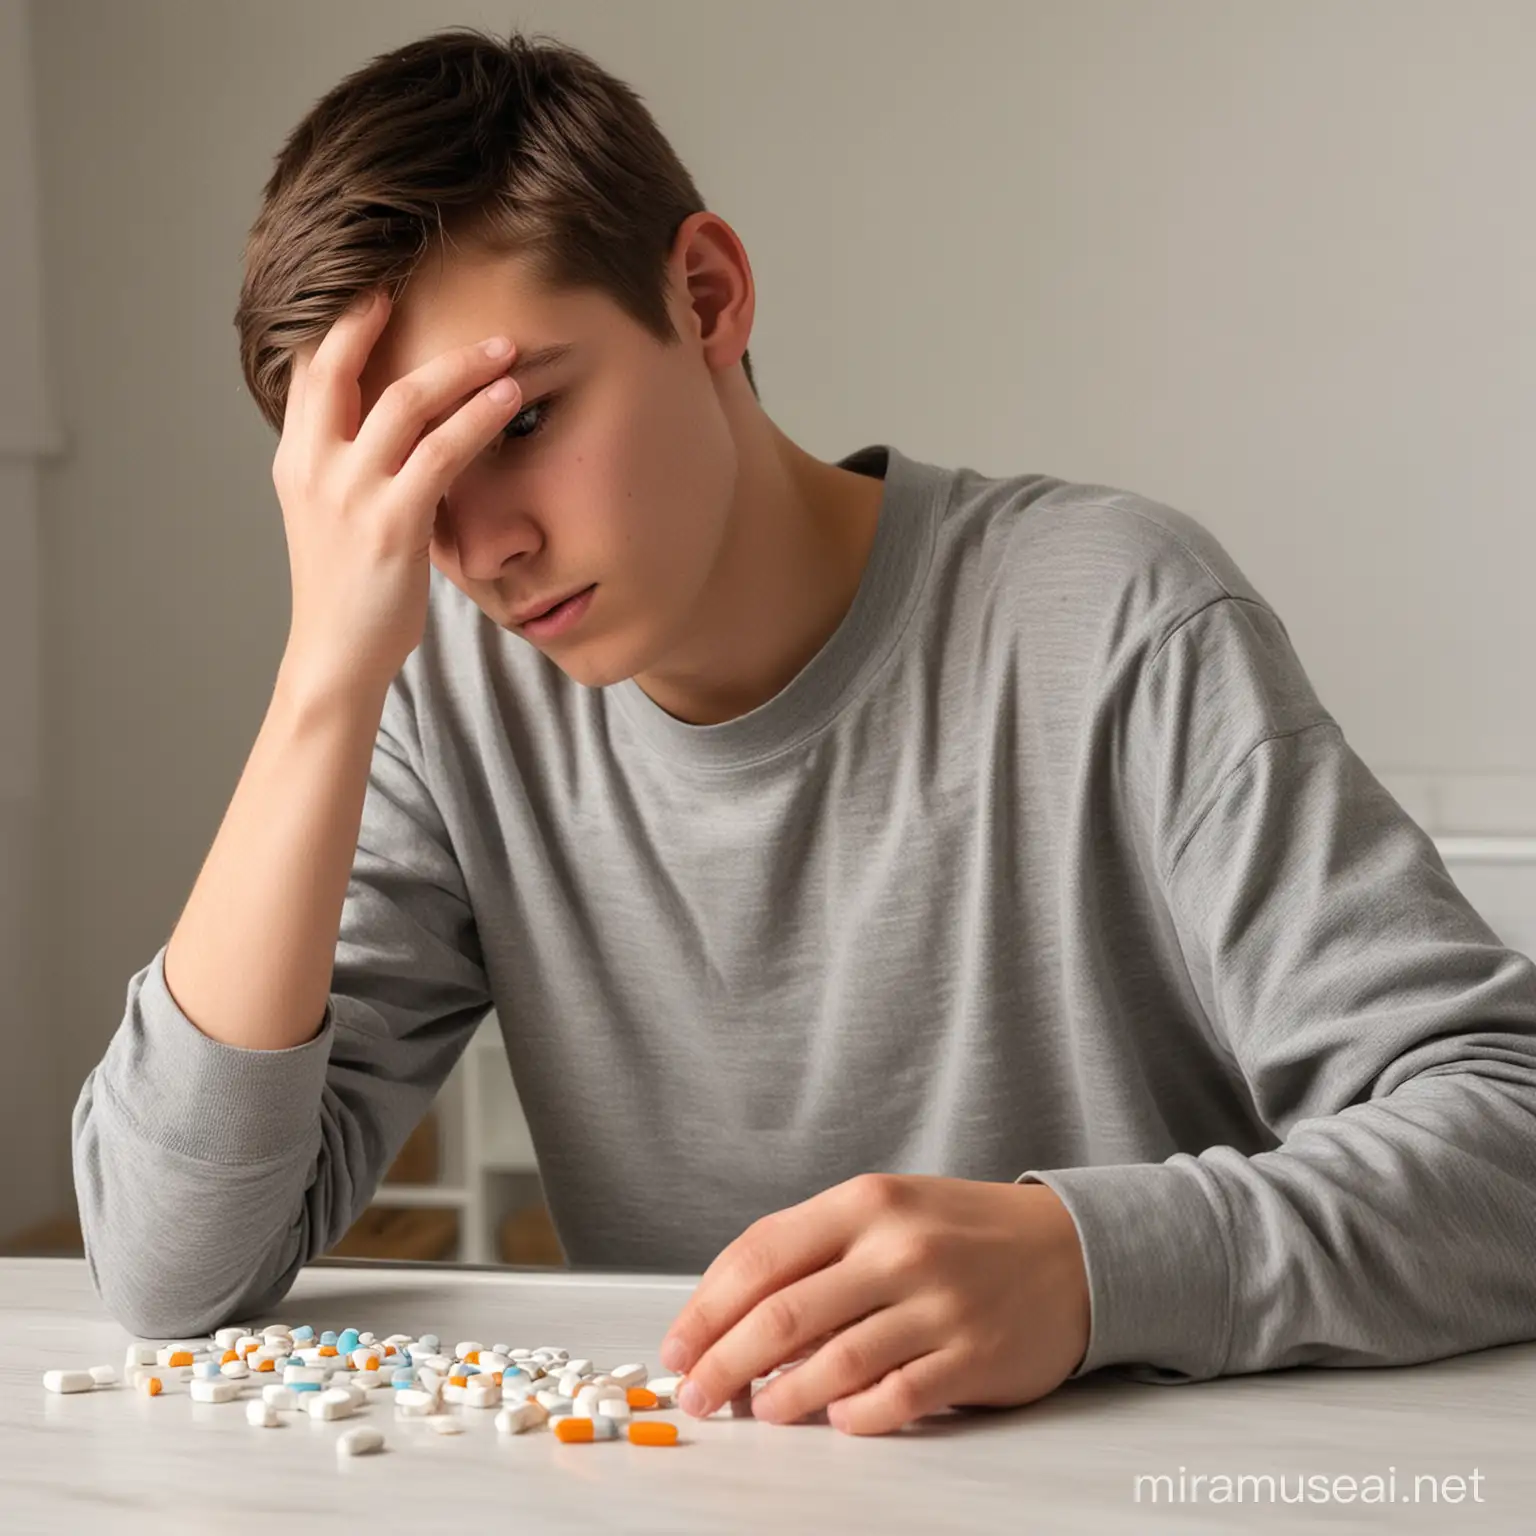 Teenager Taking Medication Indoors